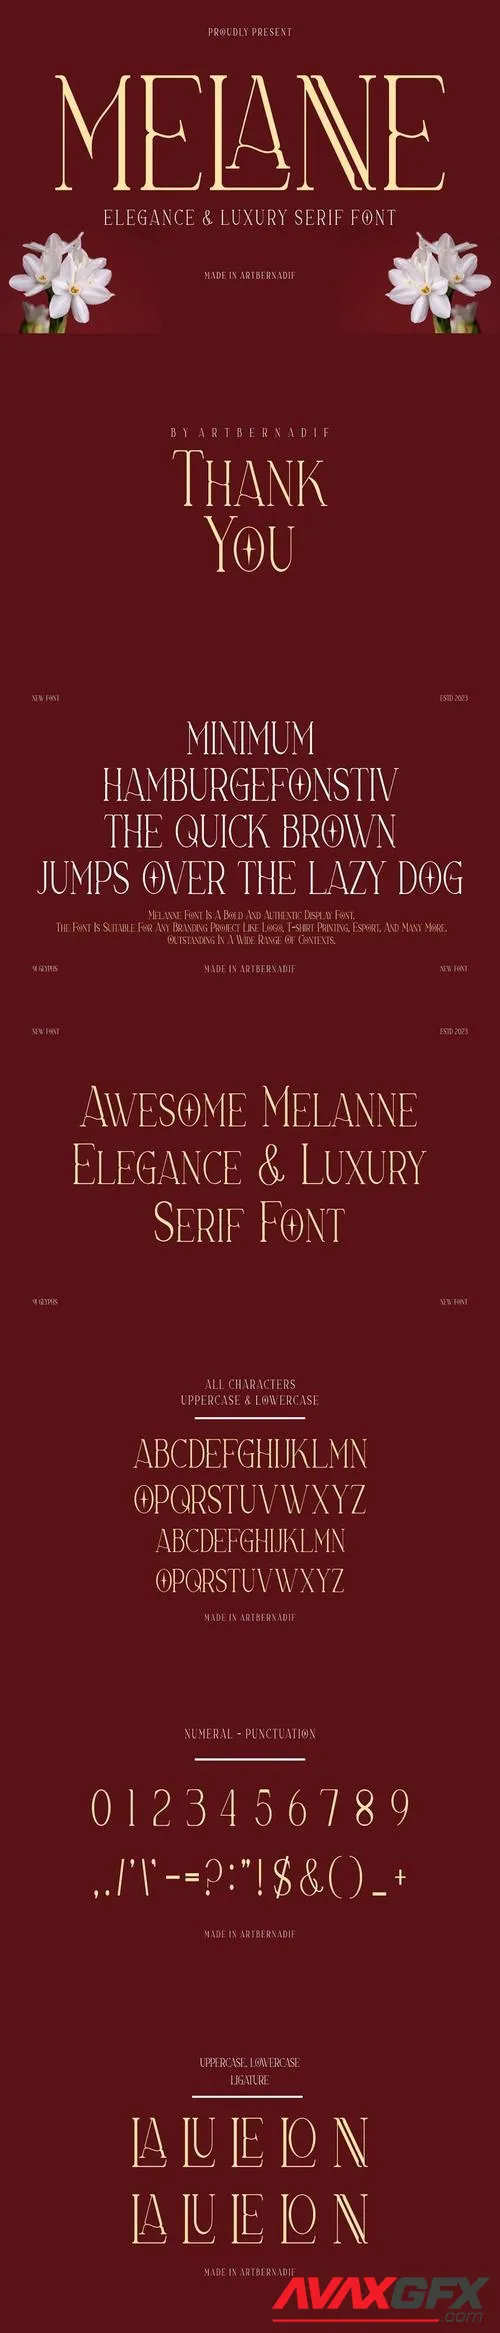 Melanne - Elegance & Luxury Serif Font